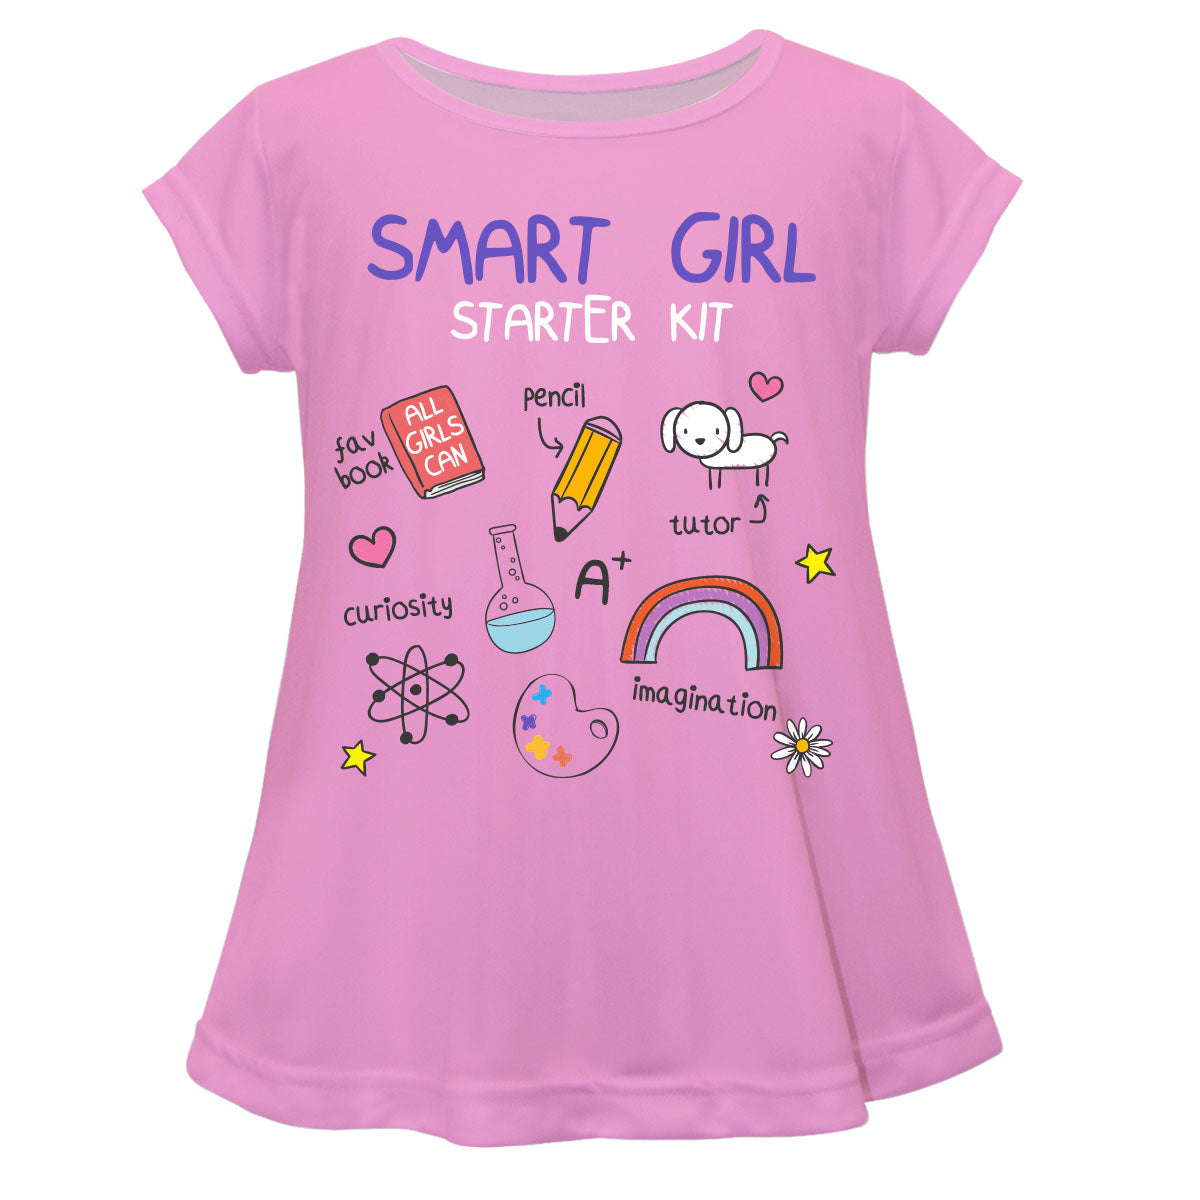 Smart Girl Starter Kit Pink Short Sleeve Laurie Top